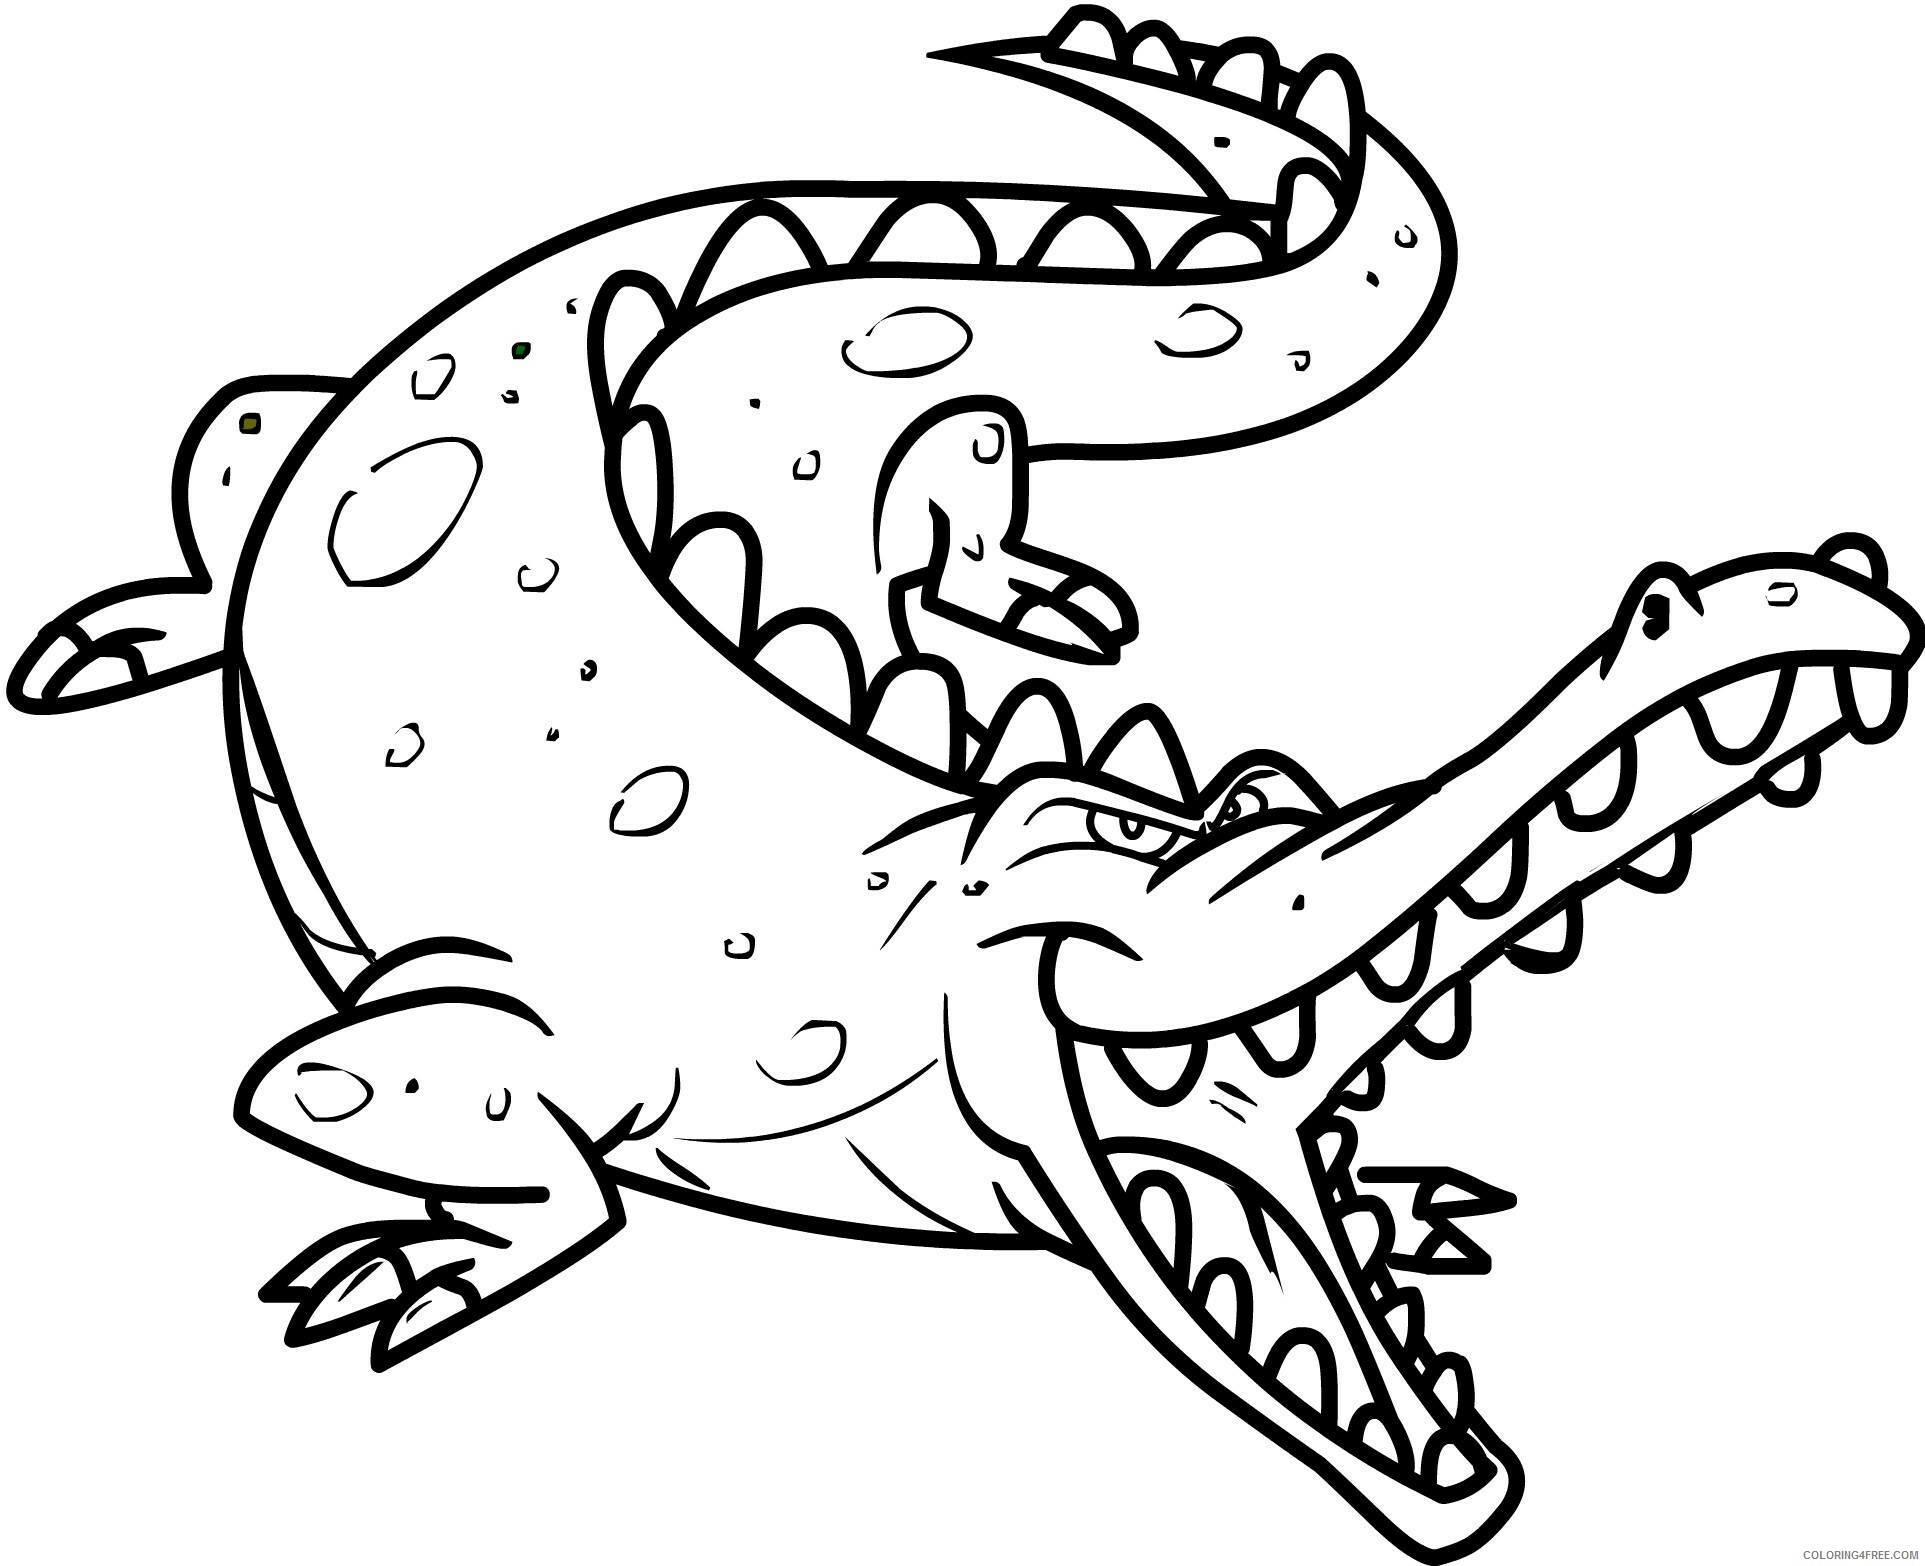 Crocodile Coloring Pages Animal Printable Sheets Crocodile To Print 2021 1312 Coloring4free